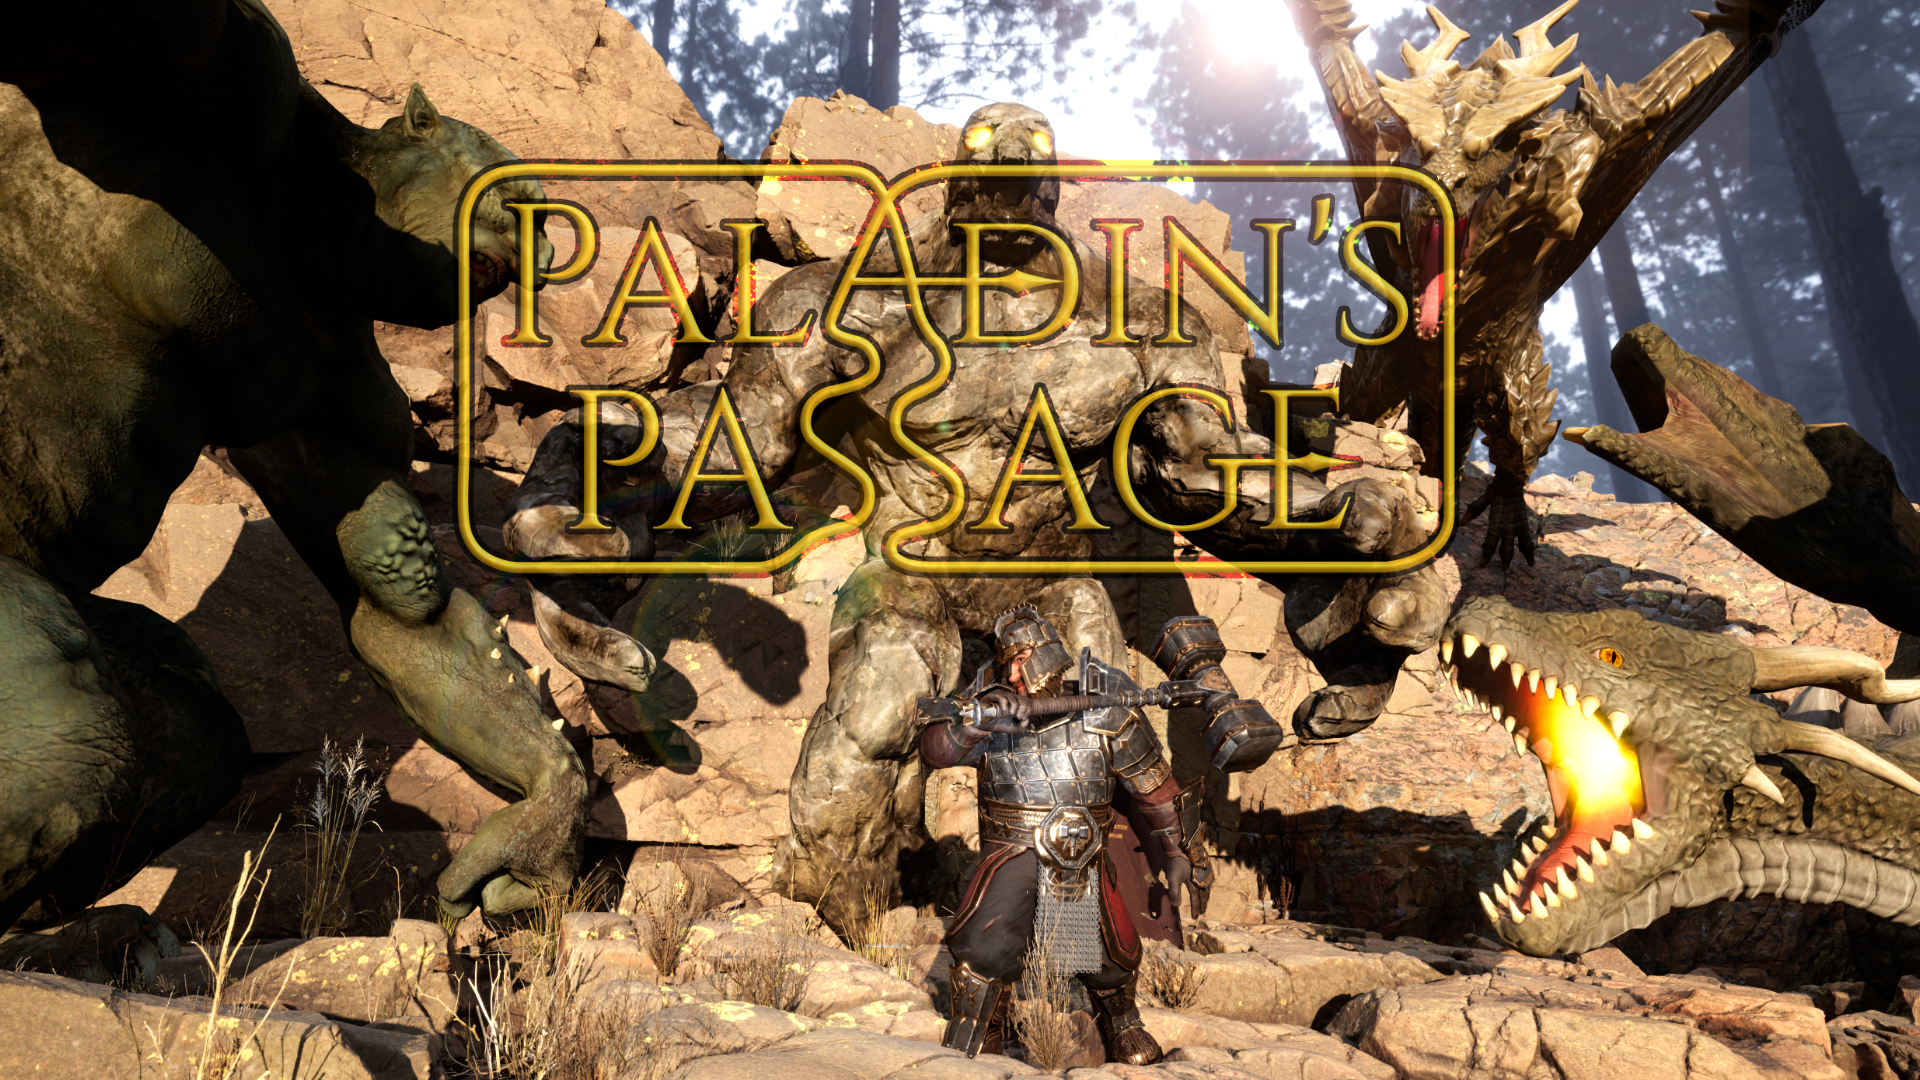 Paladin's Passage in Steam NextFest news - Mod DB